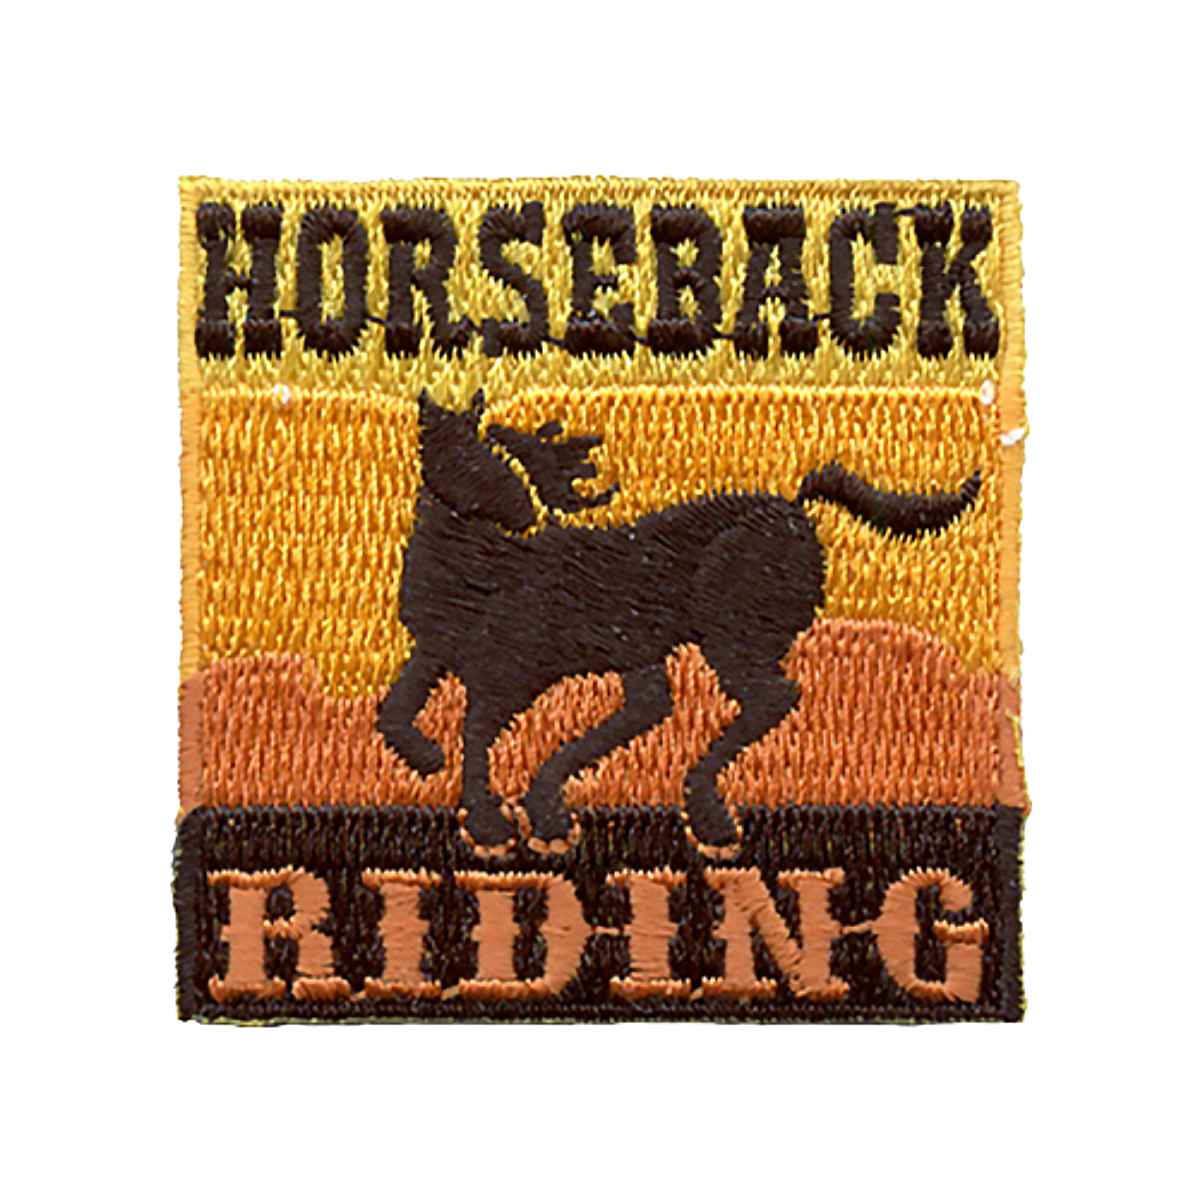 Horseback Riding - W